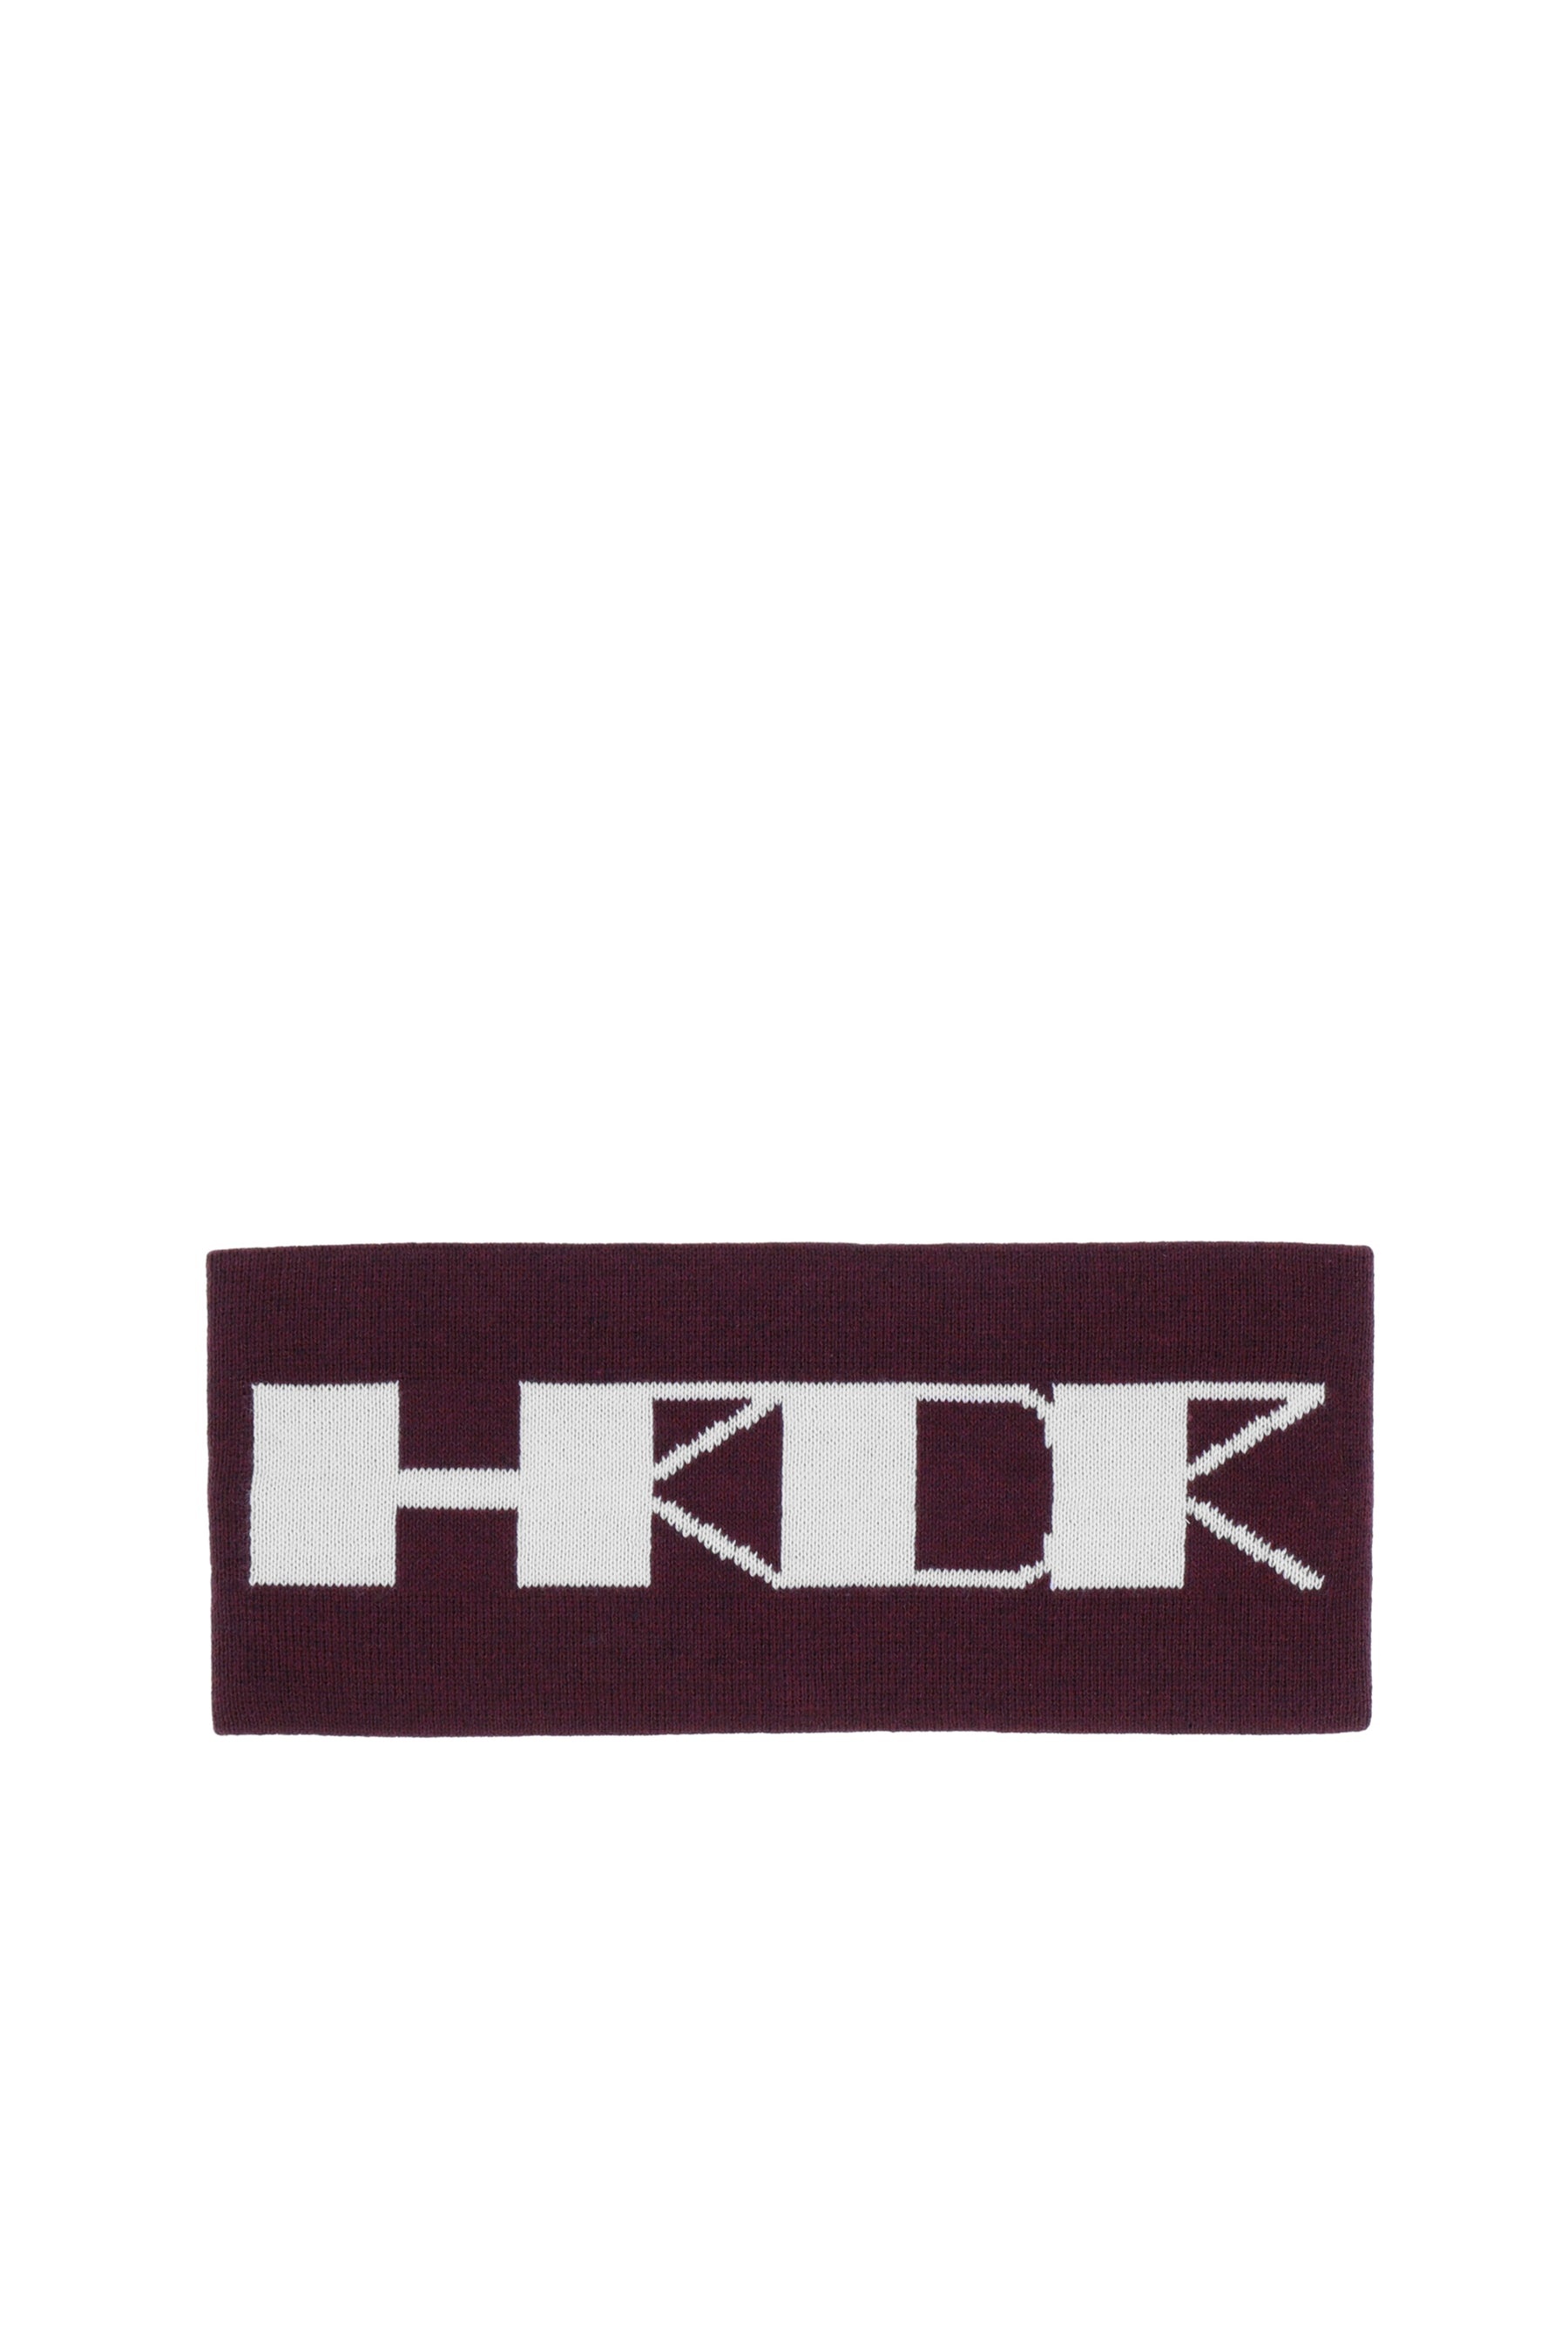 HRDR HEADBAND / MAUVE MILK - 1